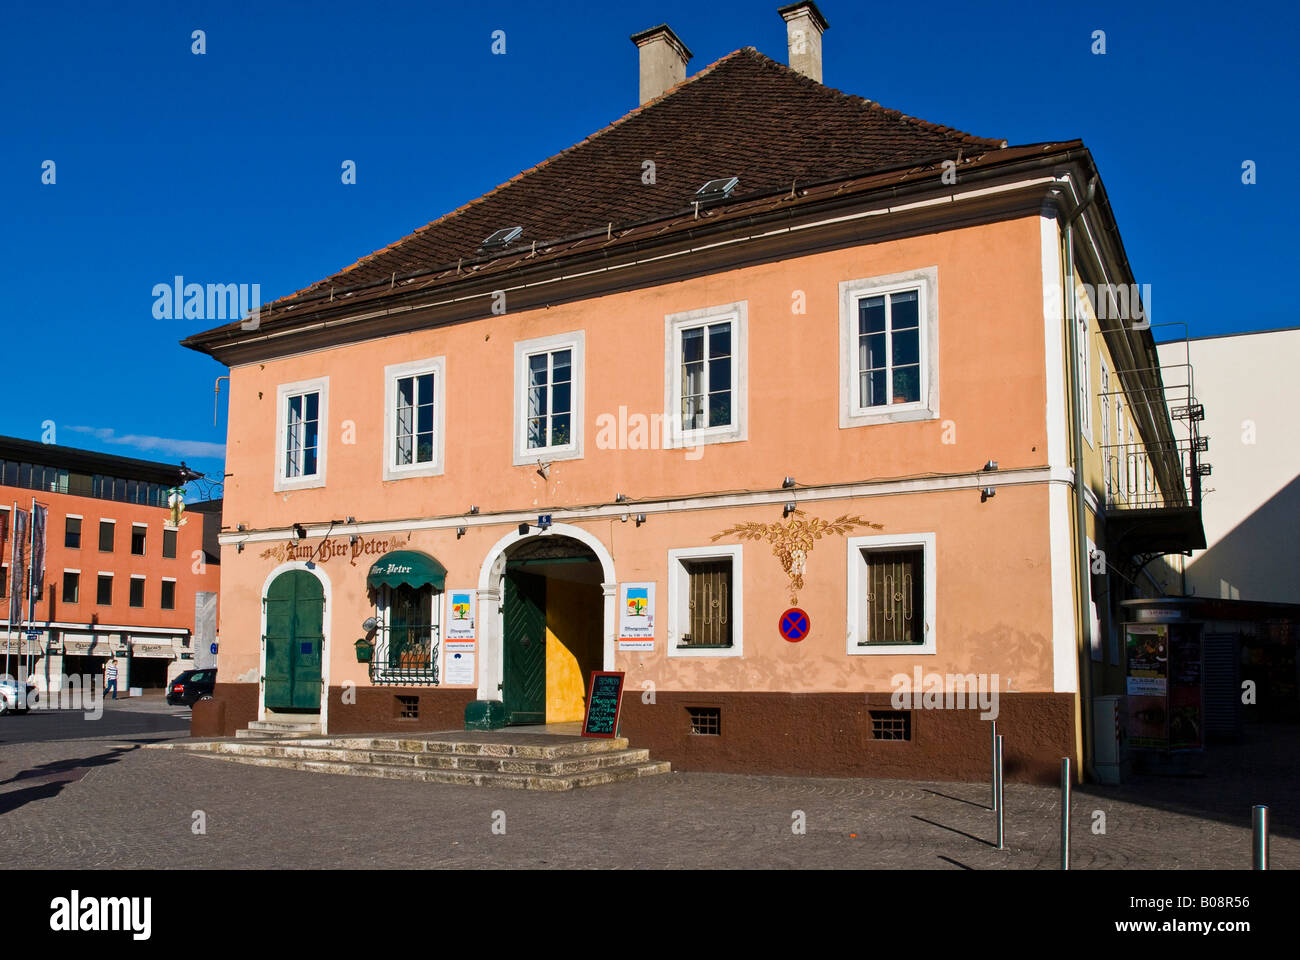 Salud, 'Zum Bier Peter', Klagenfurt, Carinthia, Austria, Europe Stock Photo